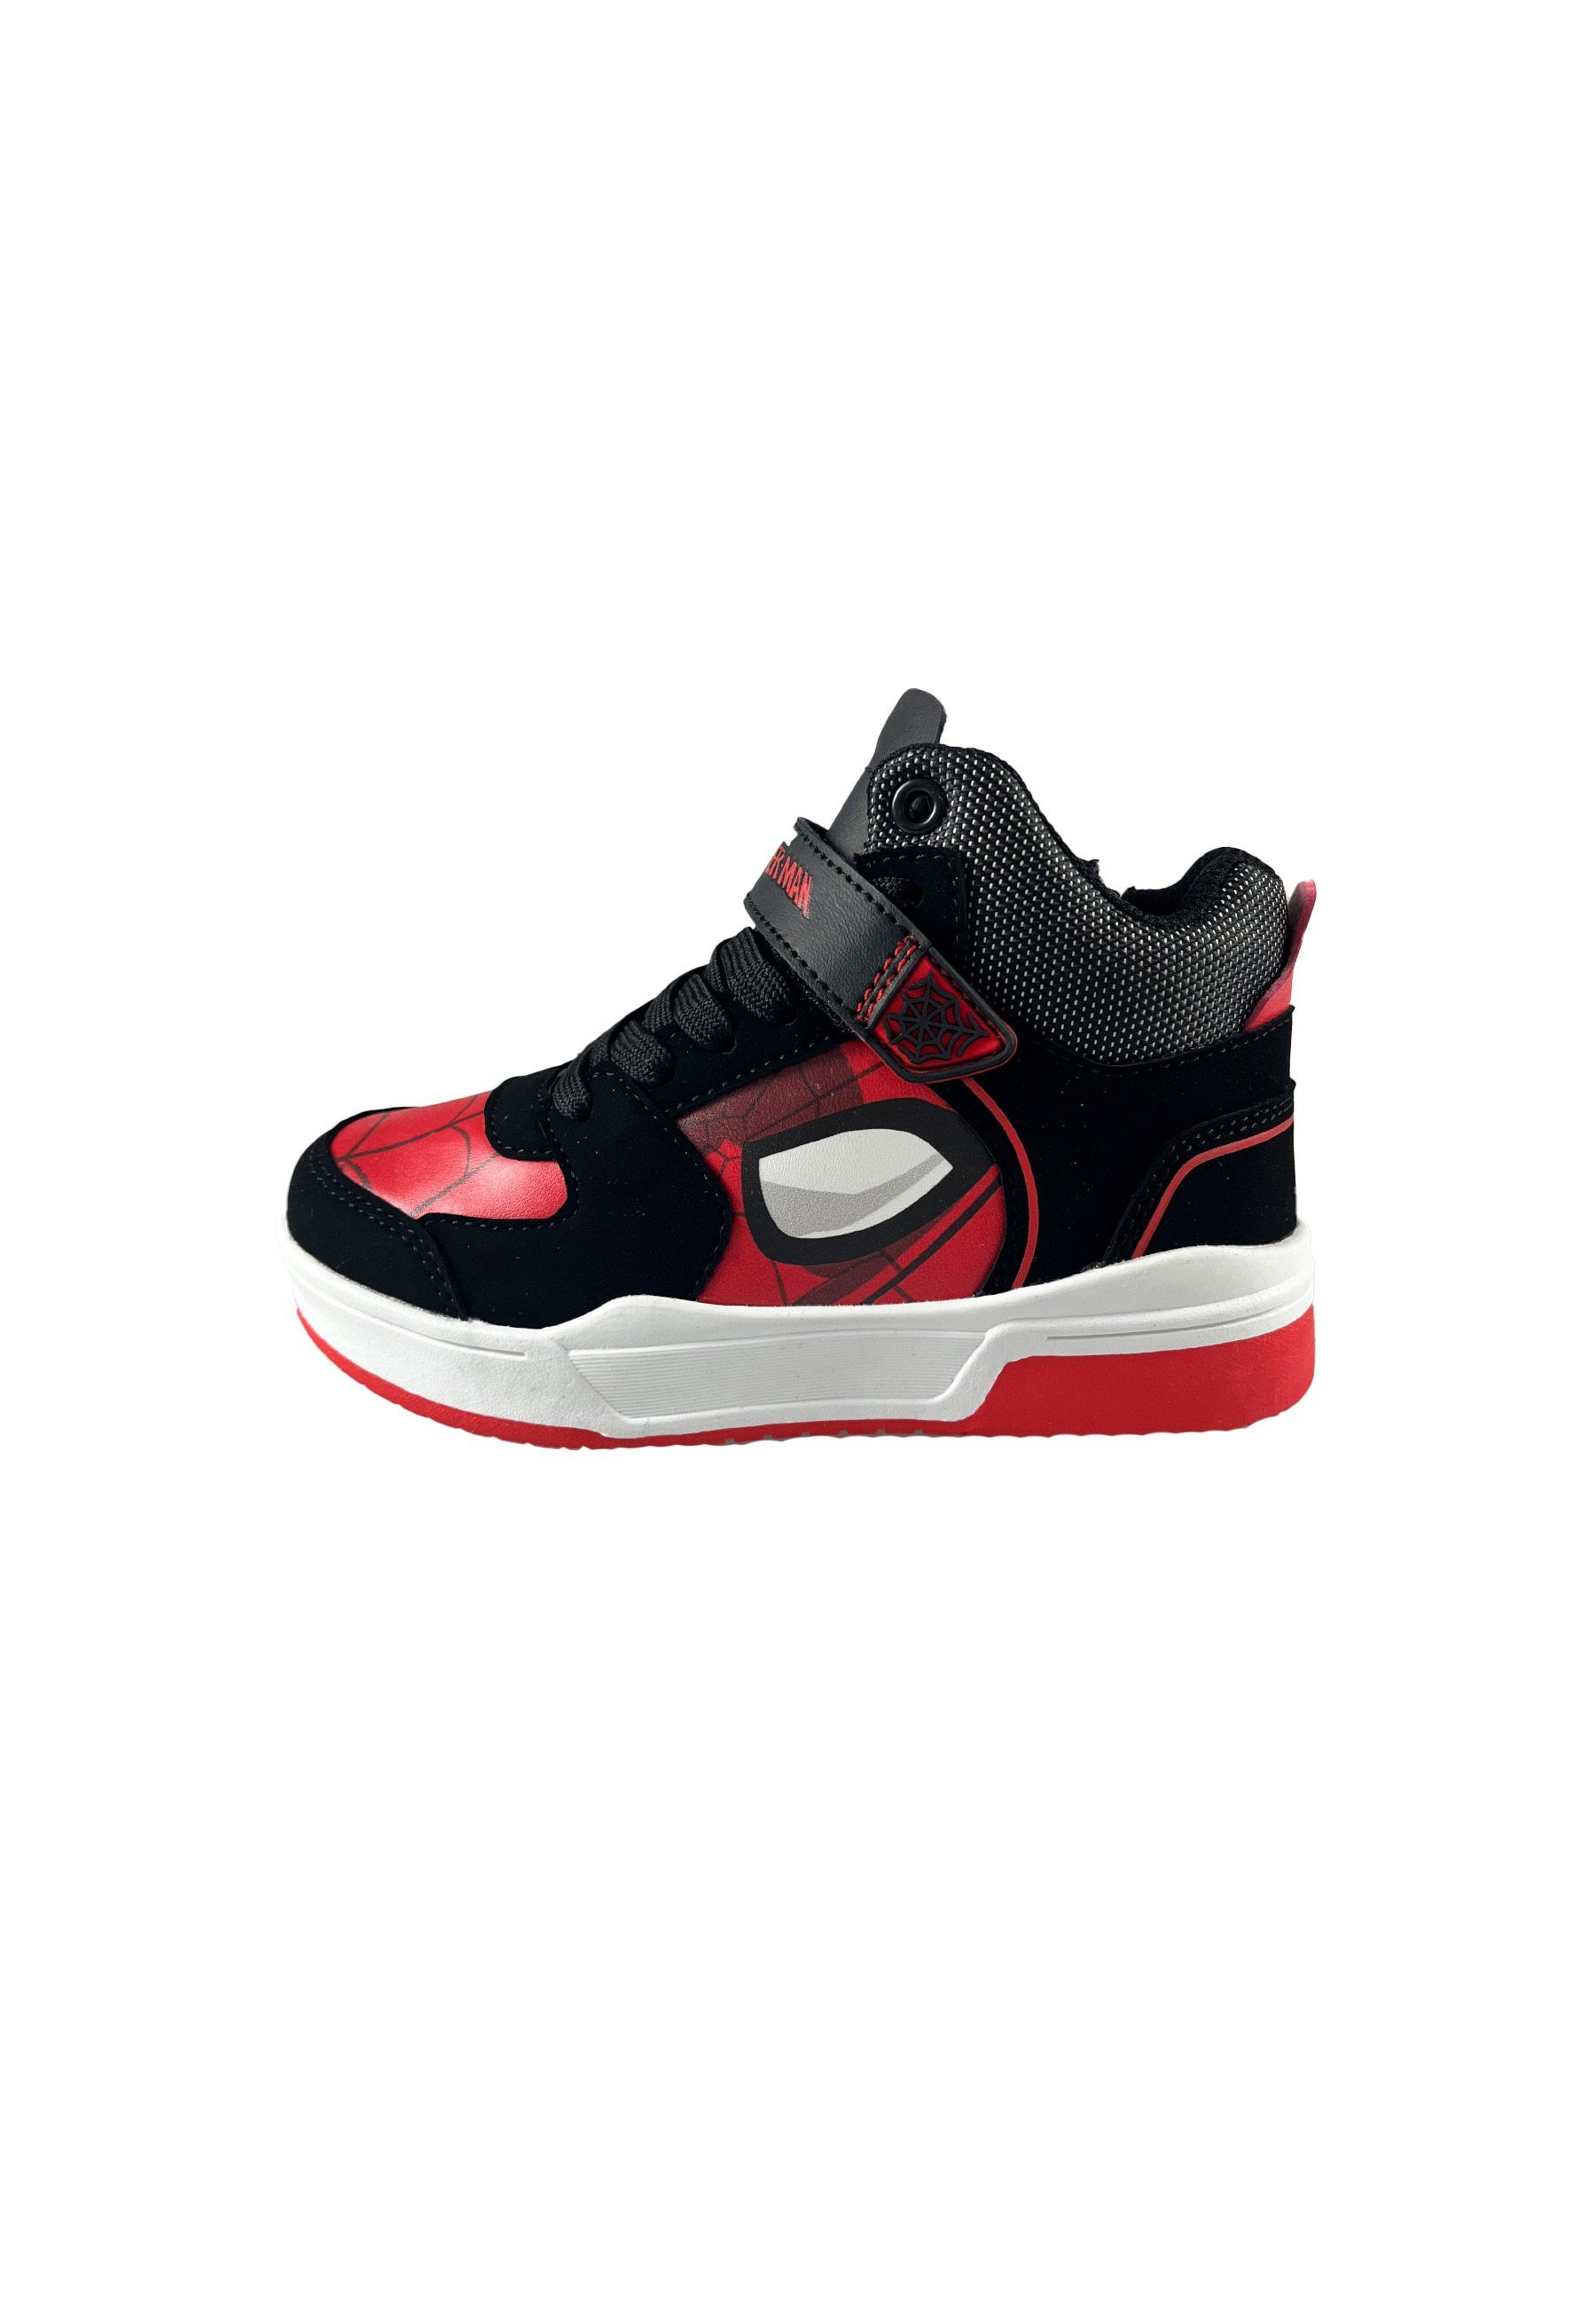 Kids2Go PawPatrol HighCut- Sneaker mit Klett- und Reißverschluss Sneaker Mit Klett- und Reißverschluss. Vegan. Lasche an der Ferse.